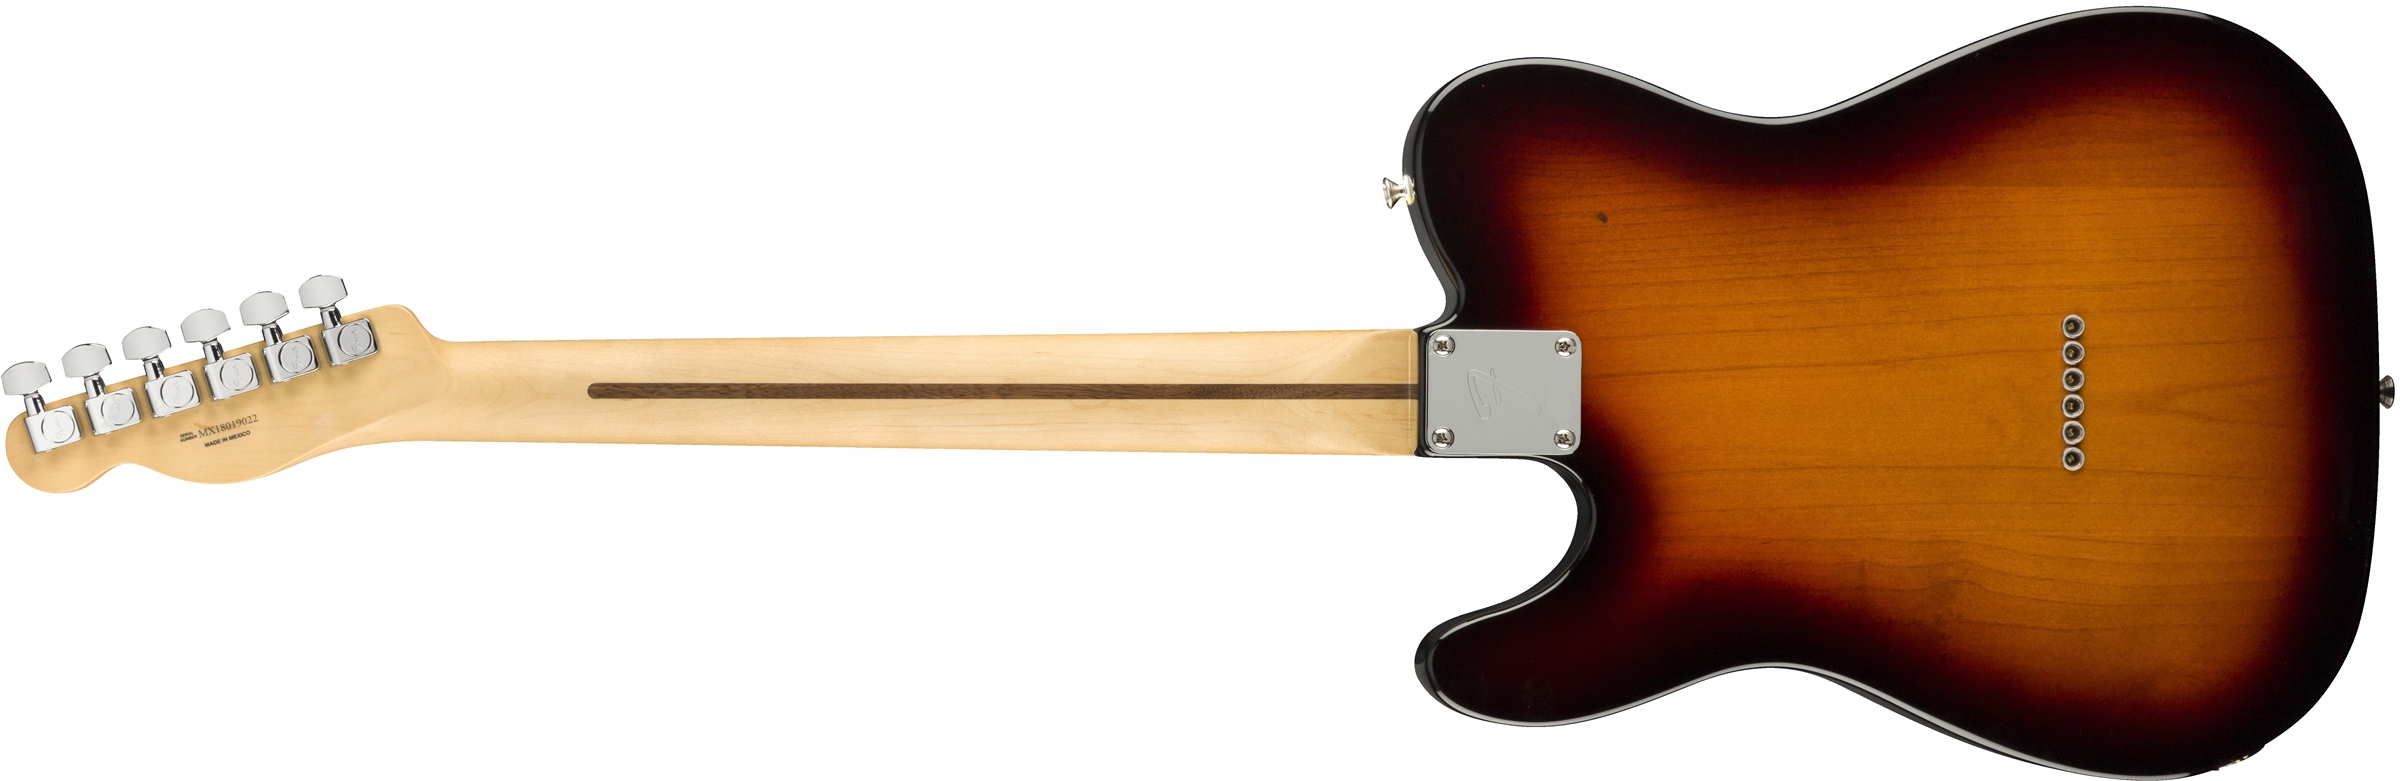 Fender Tele Player Mex Mn - 3-color Sunburst - E-Gitarre in Teleform - Variation 2